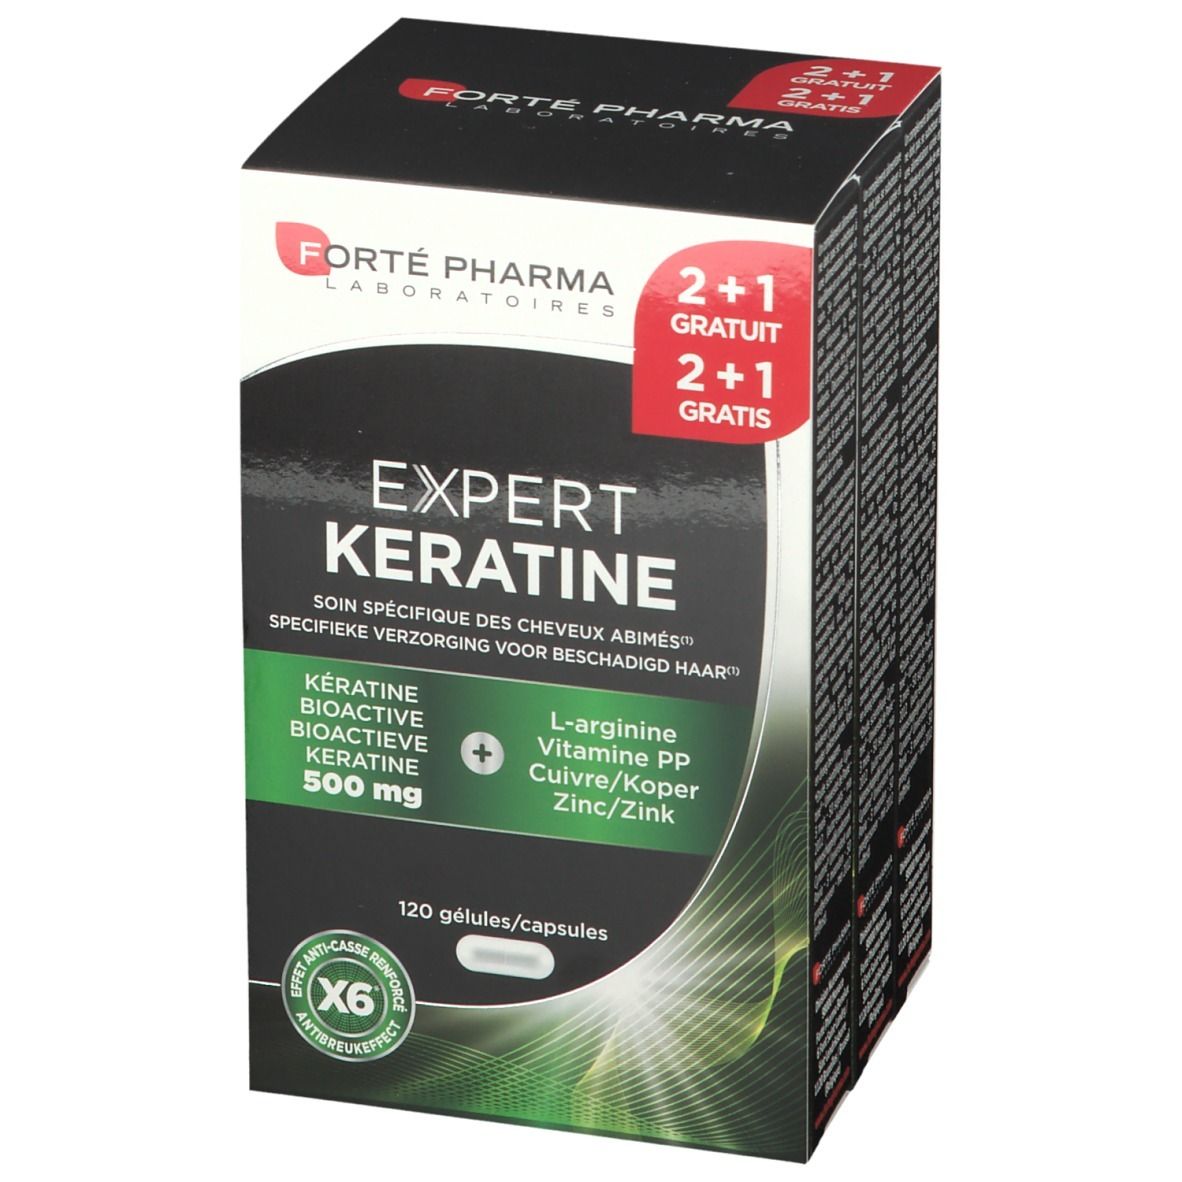 Forté Pharma Expert Keratine 2+1 GRATIS